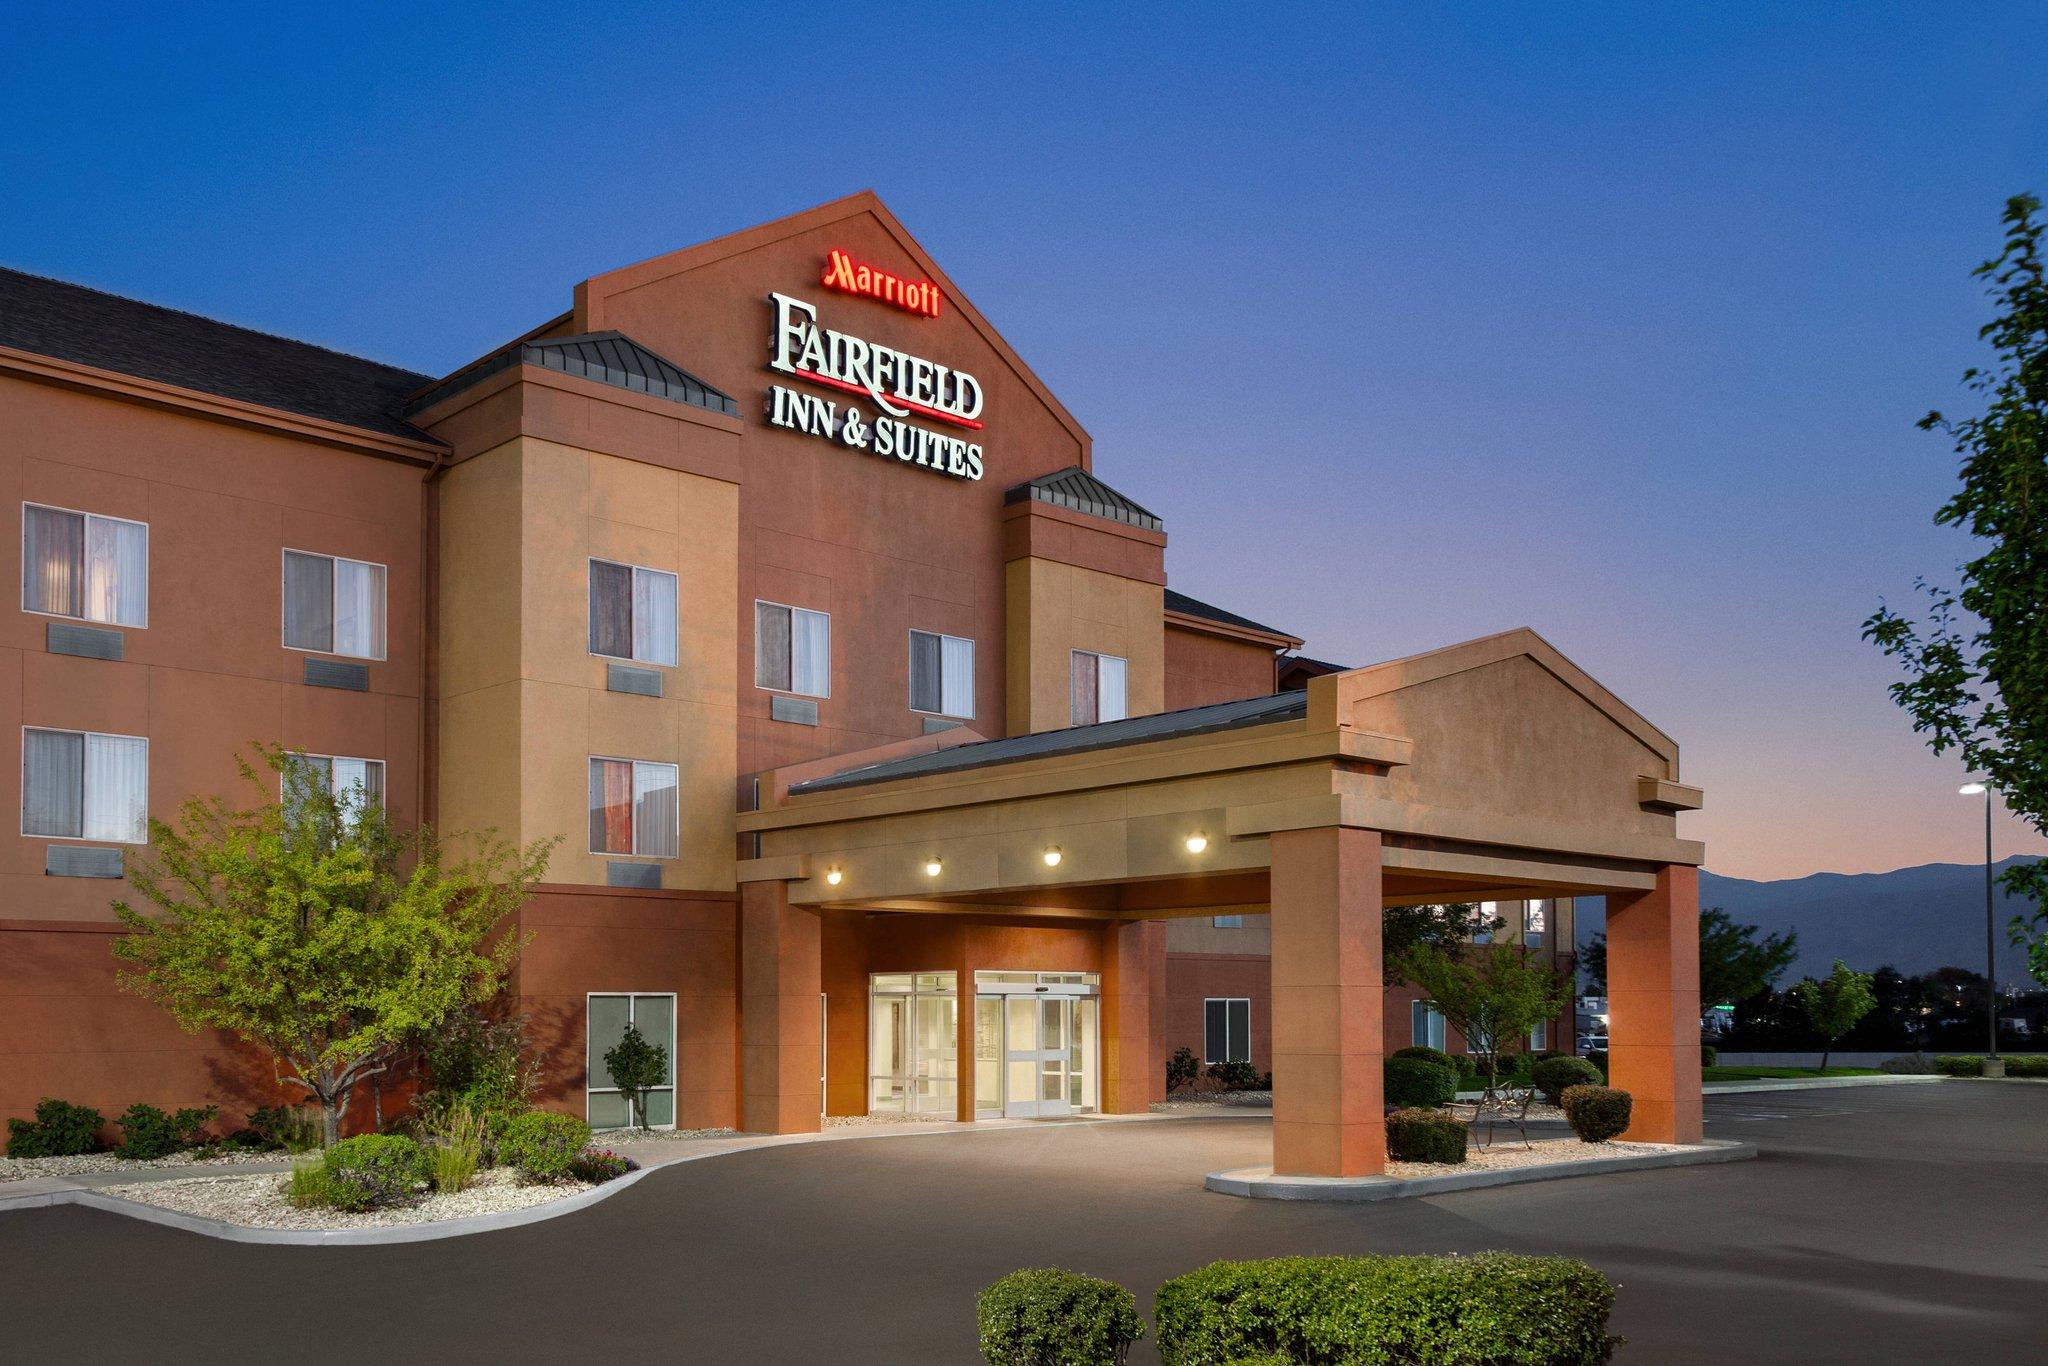 Fairfield Inn & Suites Reno Sparks in Sparks, NV